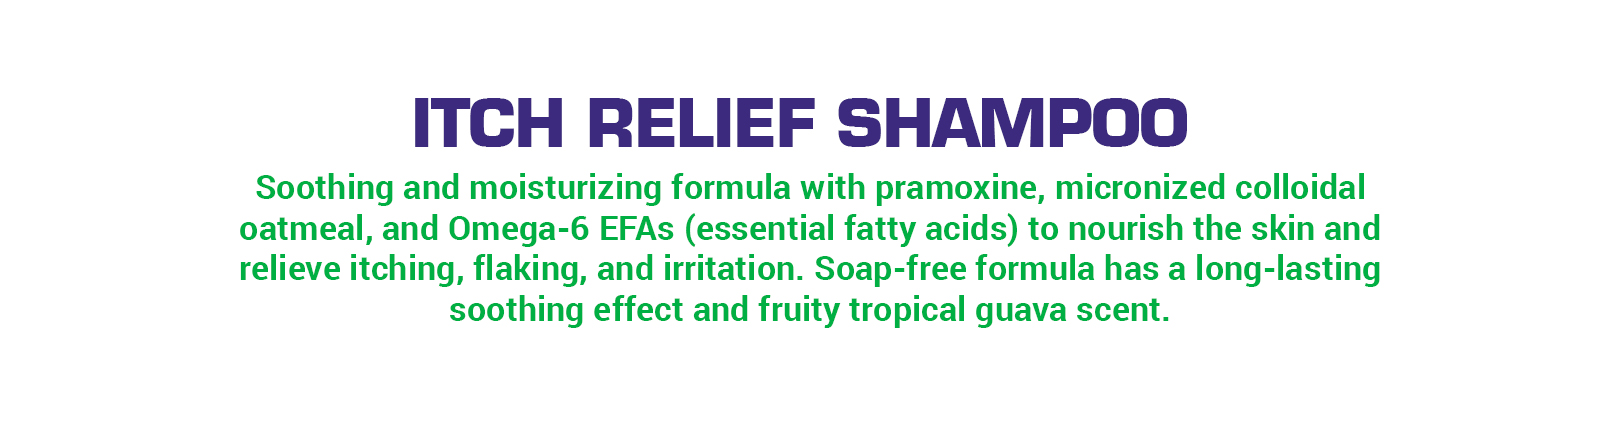 itch-relief-shampoo